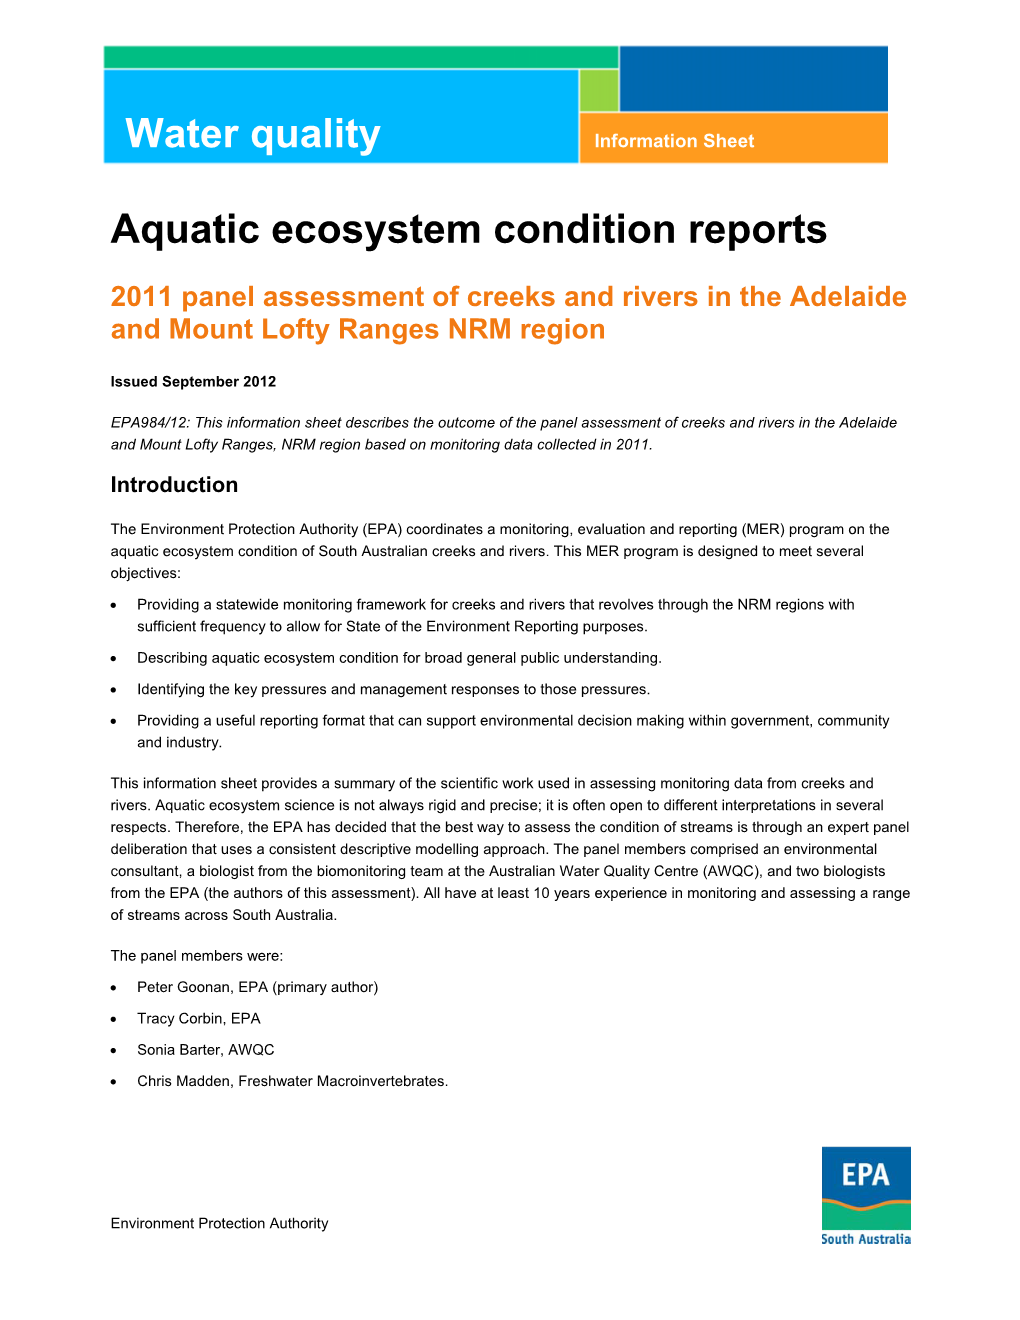 Aquatic Ecosystem Condition Reports